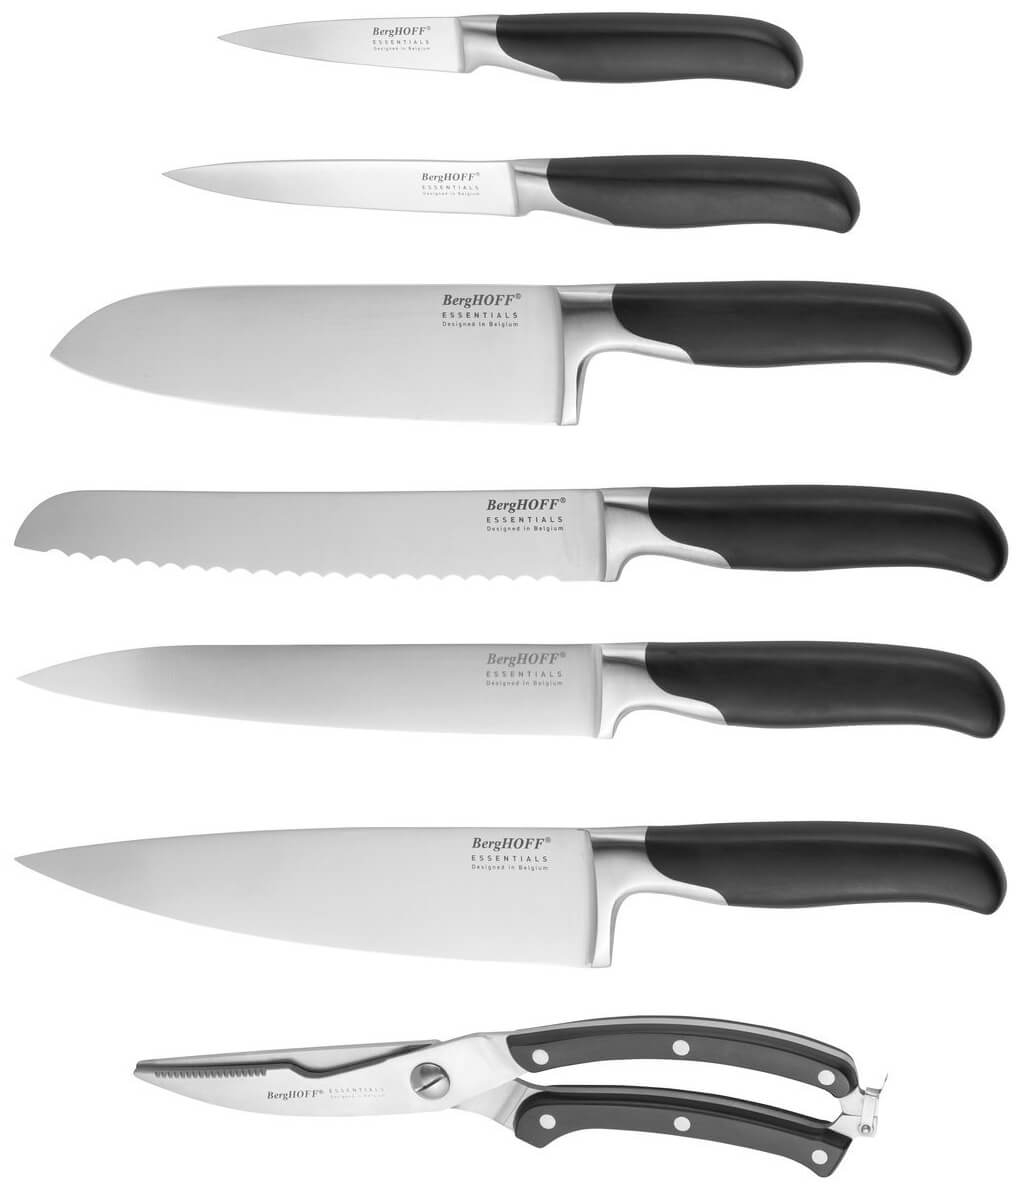  ножей BergHOFF Essentials в колоде 8 пр -  ы ножей .